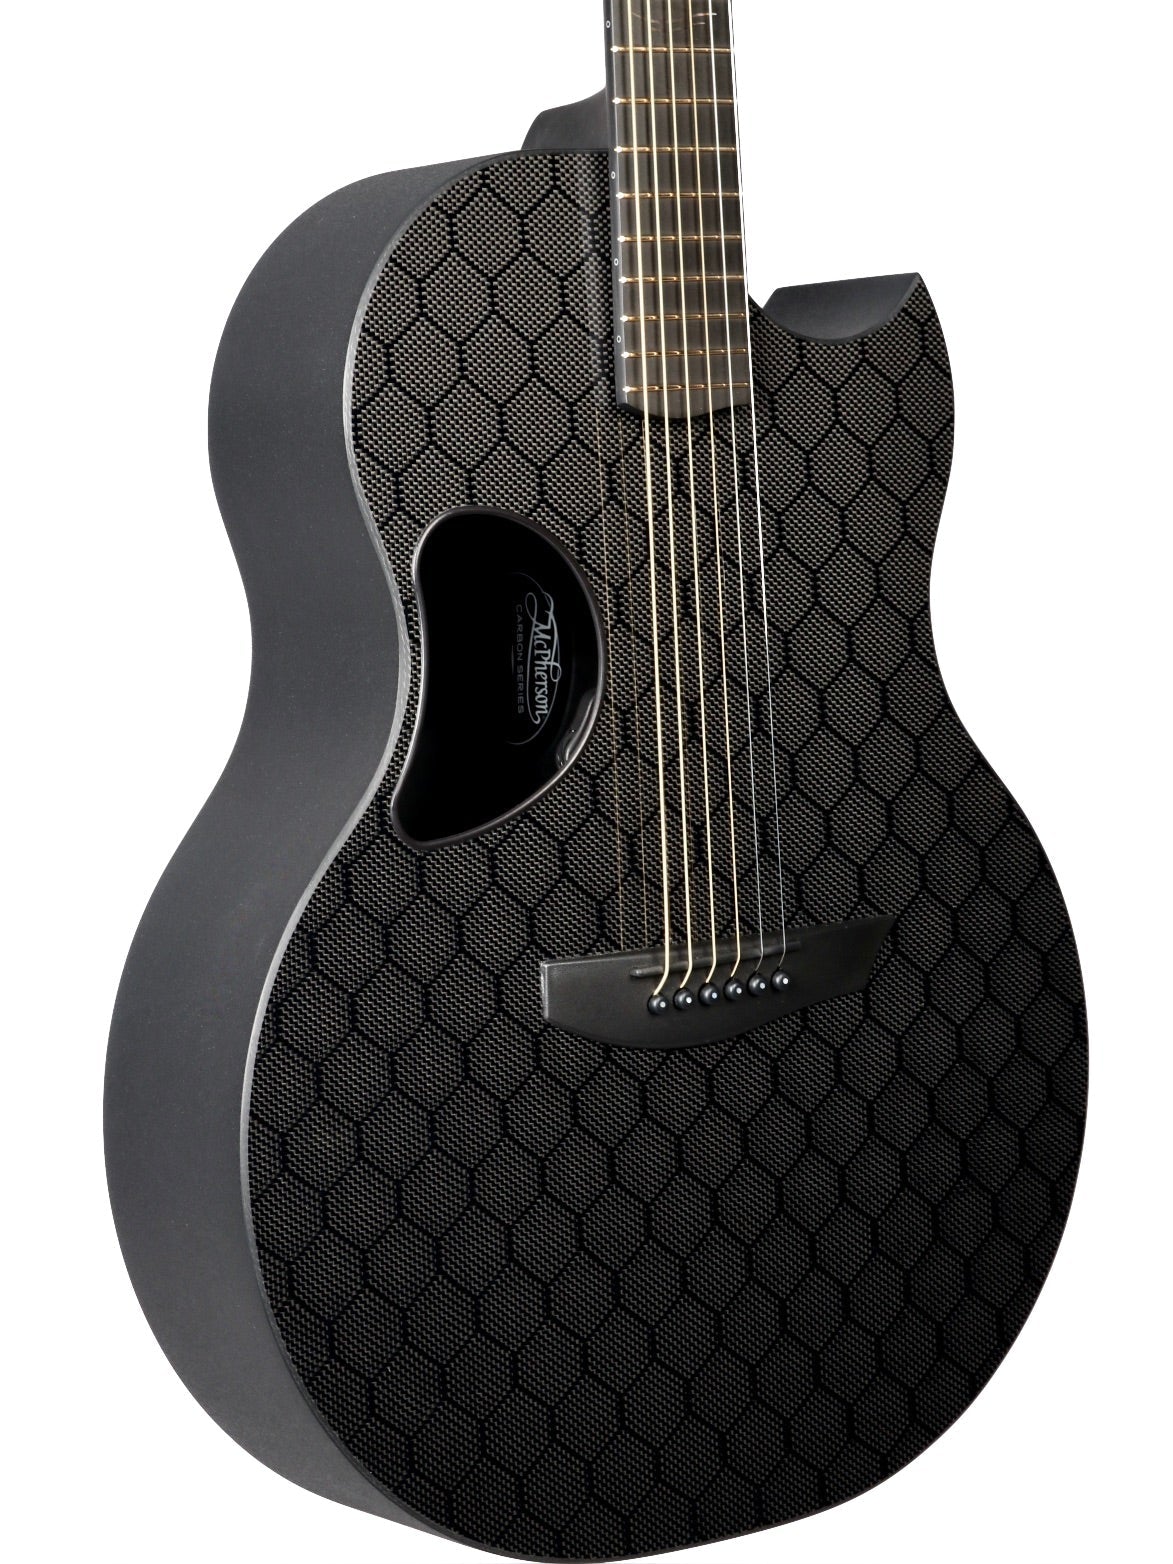 McPherson Carbon Fiber Sable Blackout Honeycomb Finish #11693 - McPherson Guitars - Heartbreaker Guitars